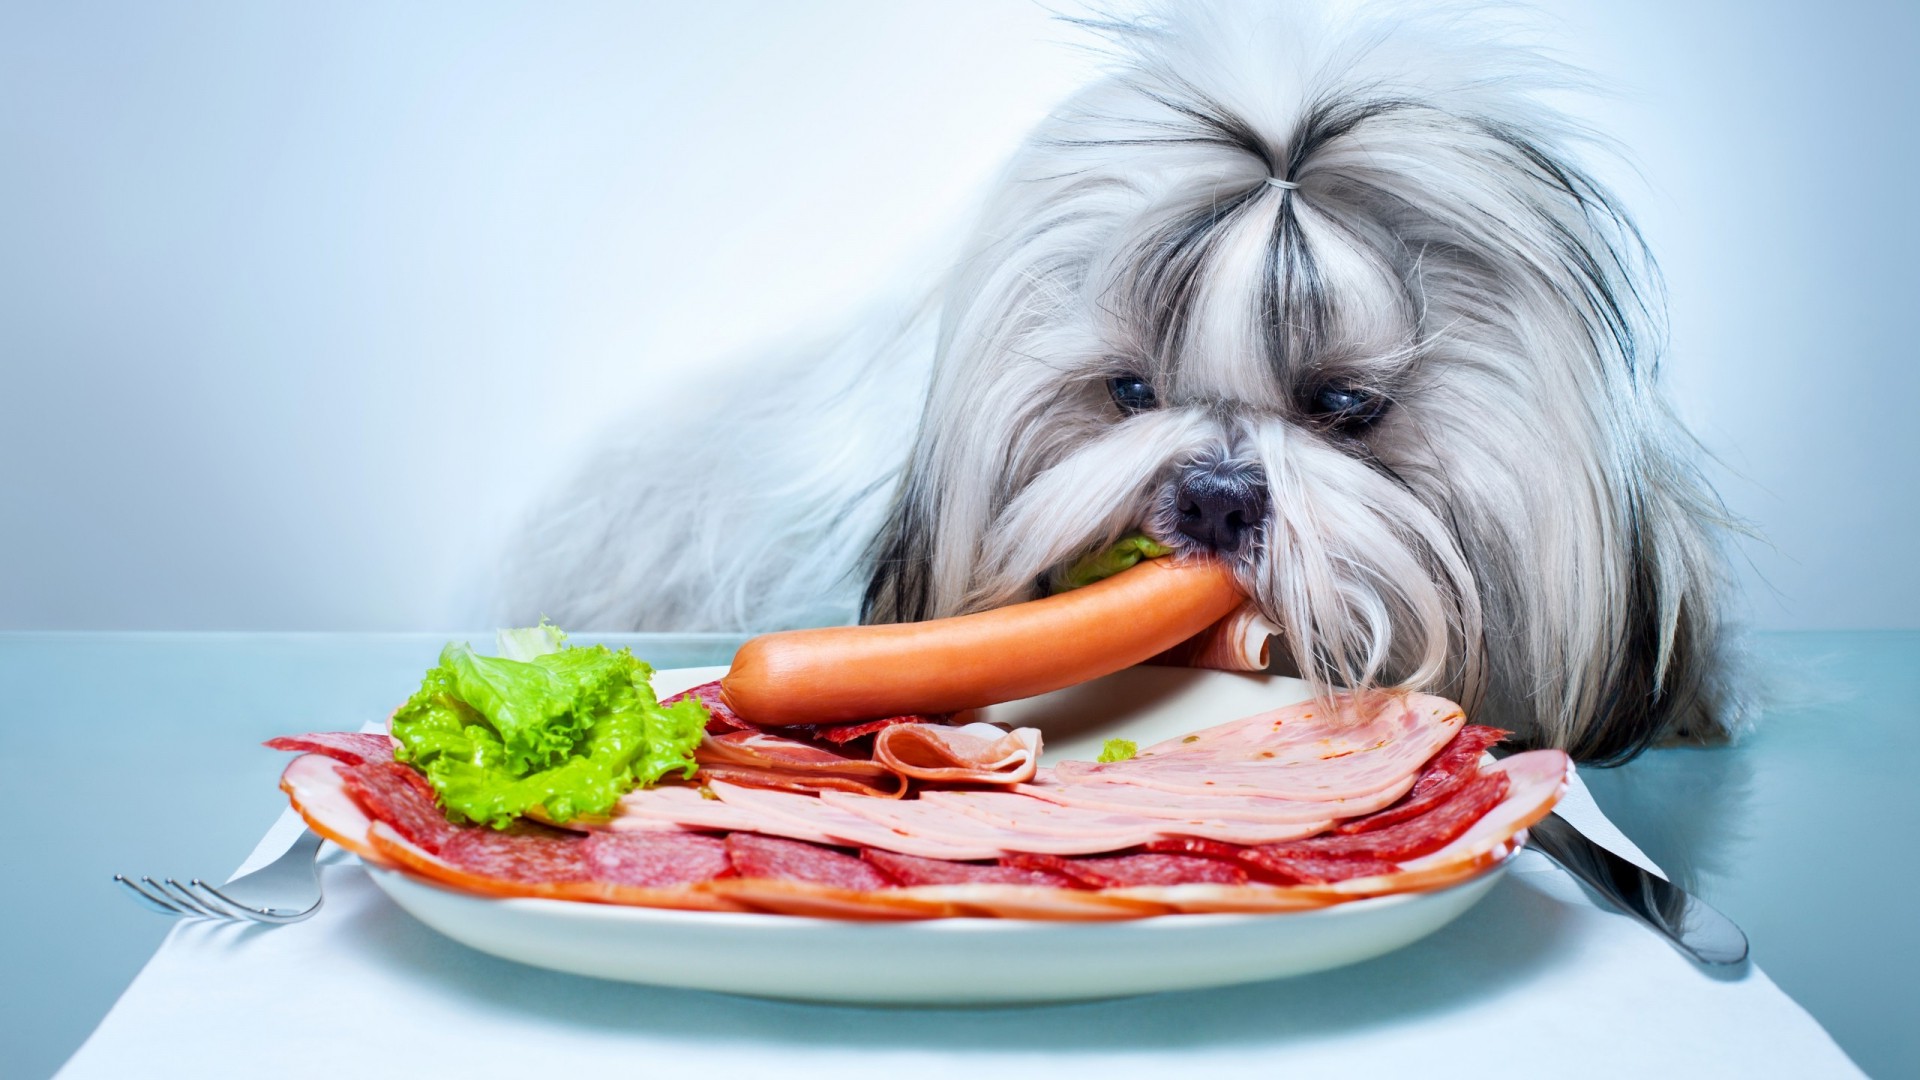 animals, Dog, Pet, Food, Meat, Vegetables, Plates, Salami, Simple Background, Eating Wallpaper